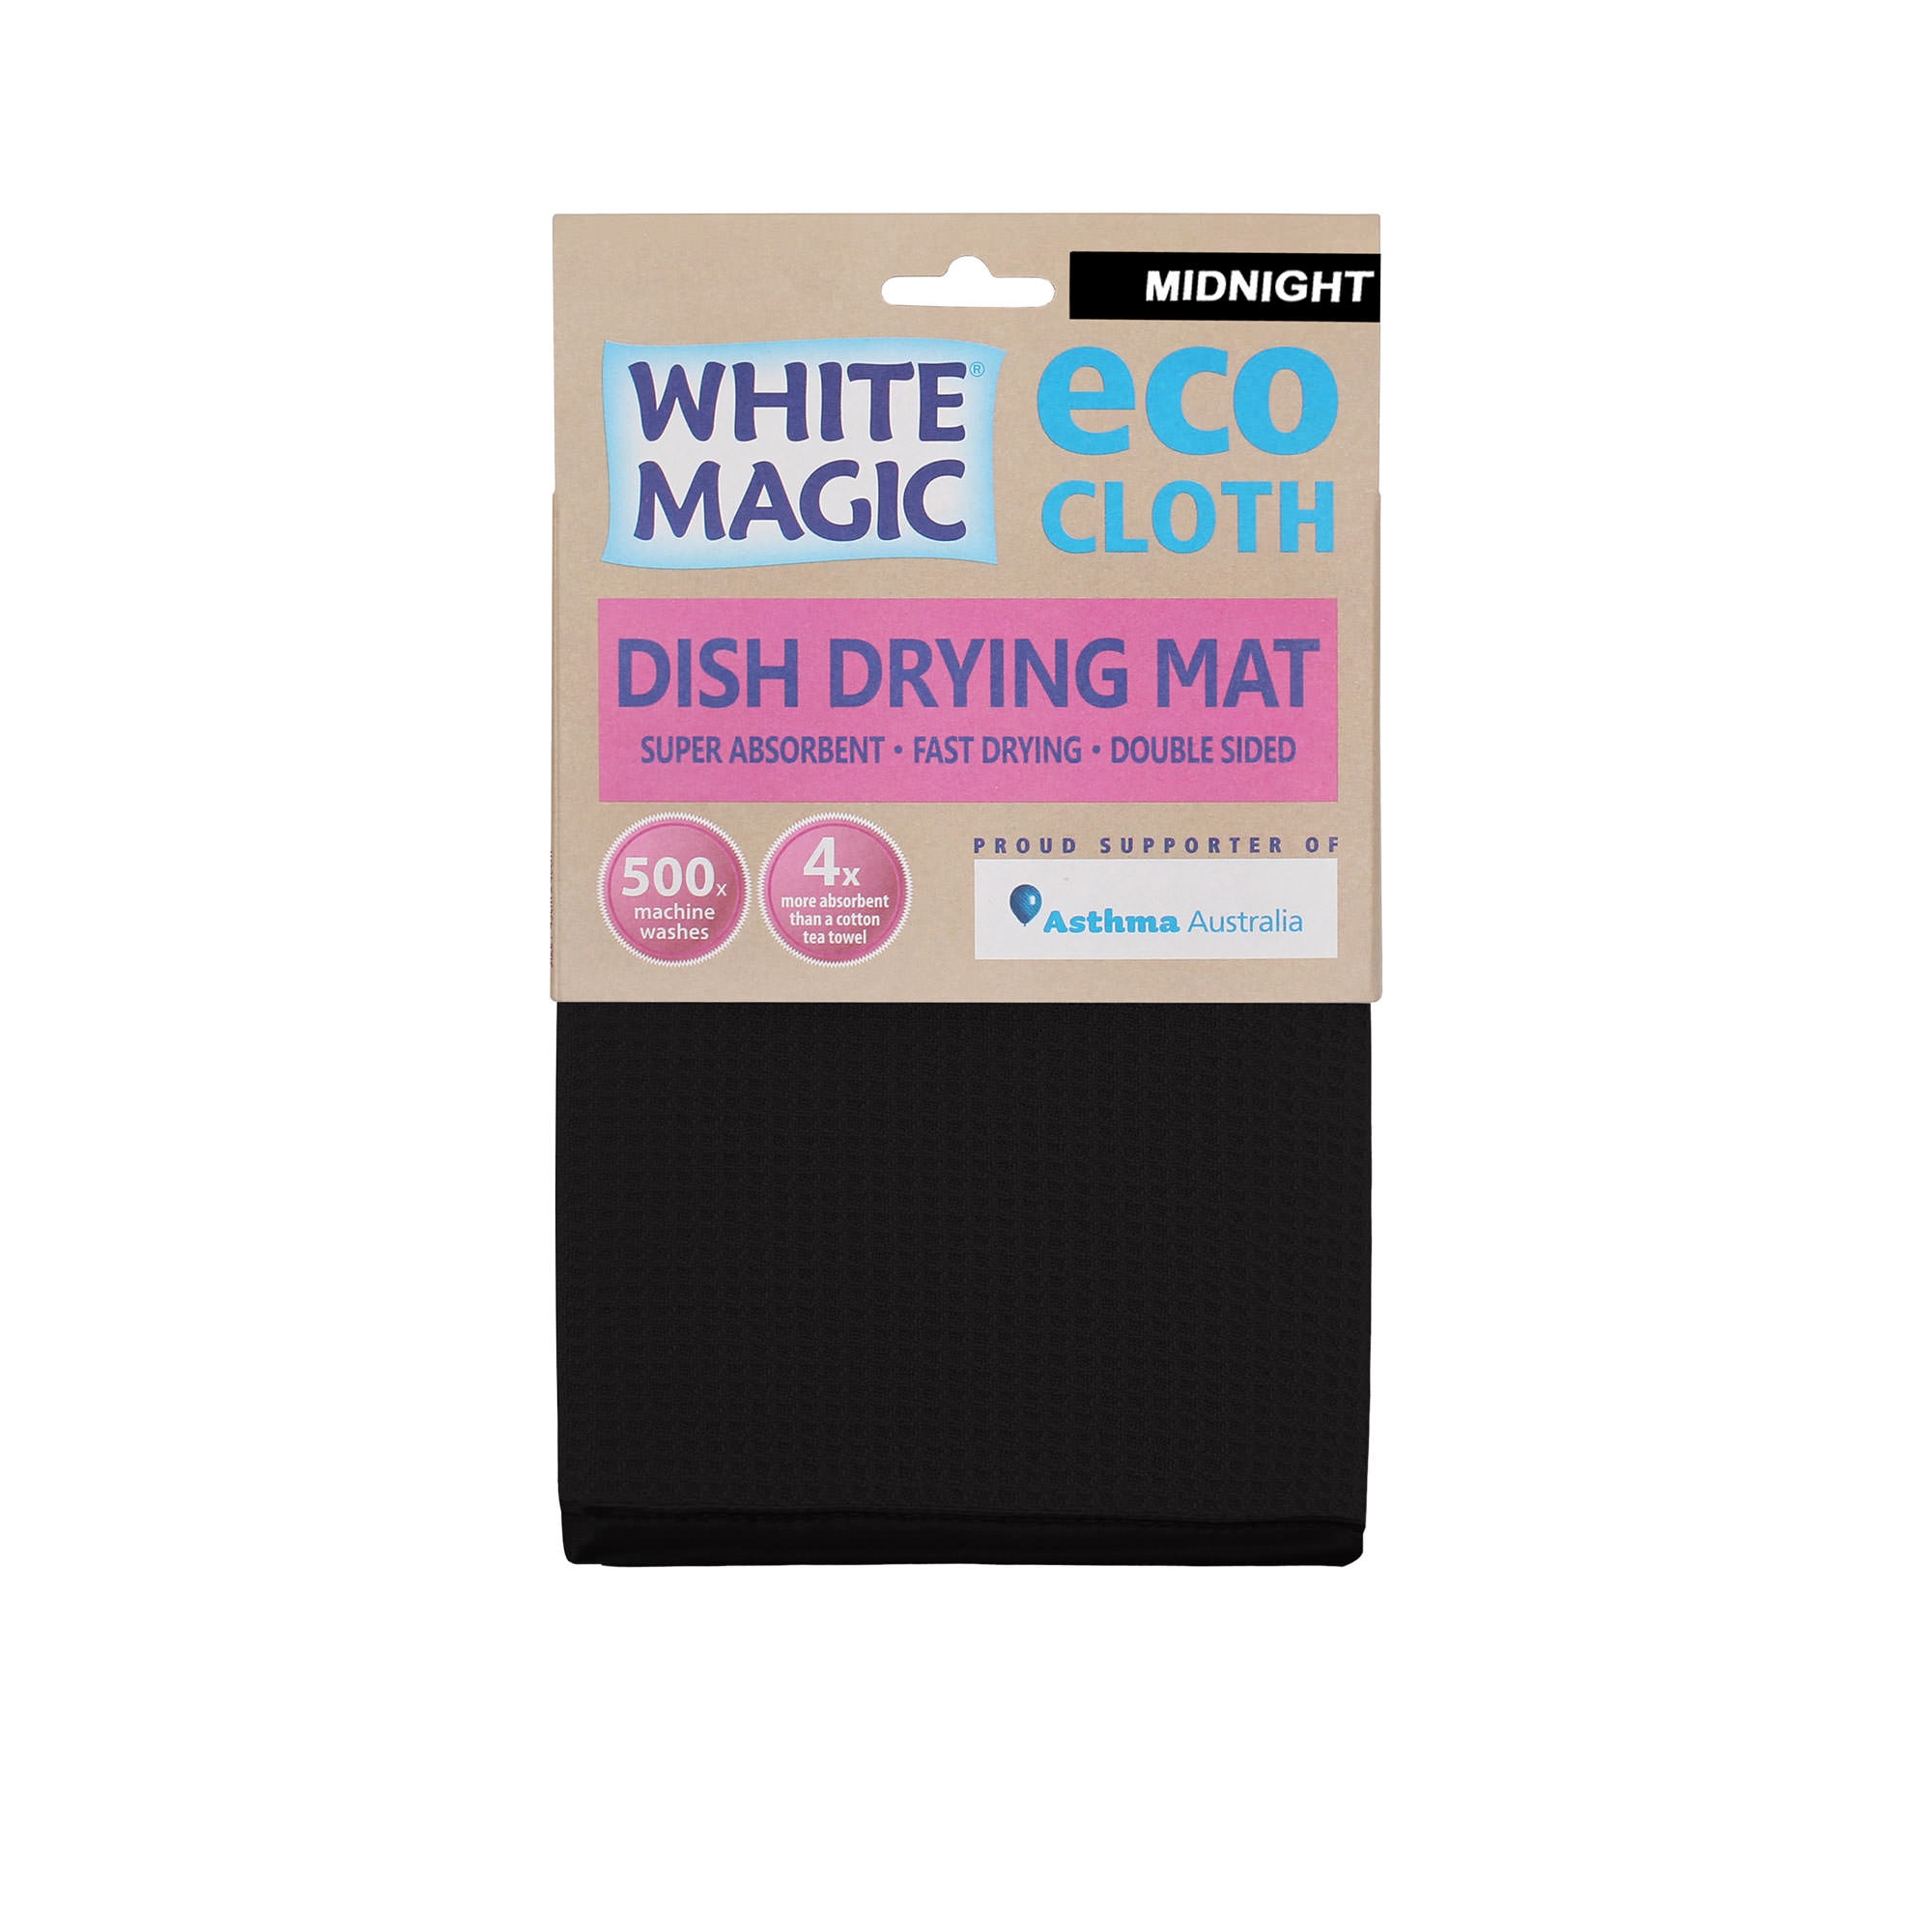 White Magic Eco Cloth Dish Drying Mat Midnight Image 1